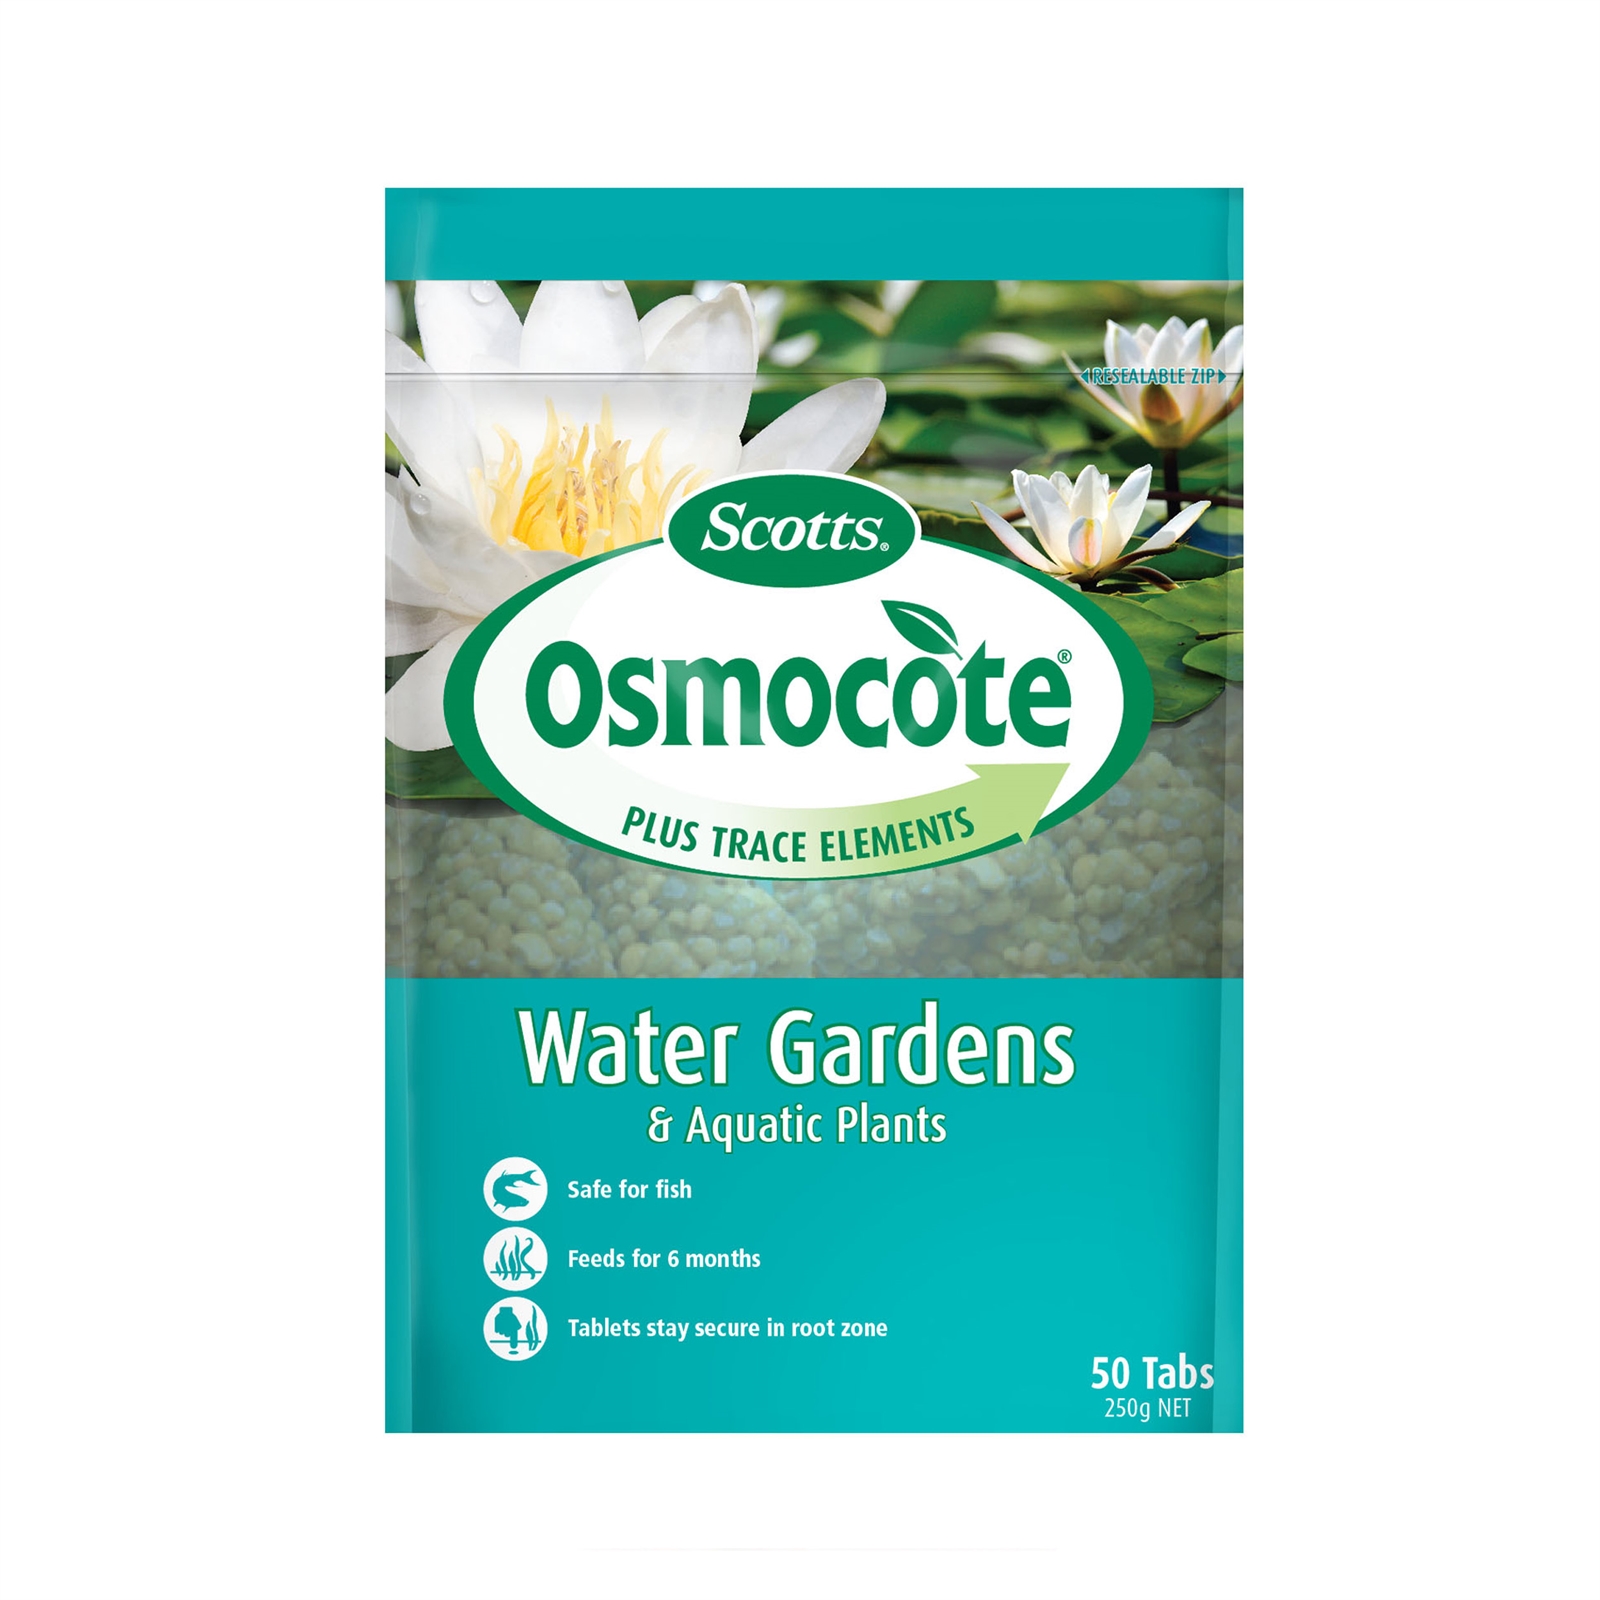 Osmocote 250g Aquatic Plants Controlled Release Fertiliser